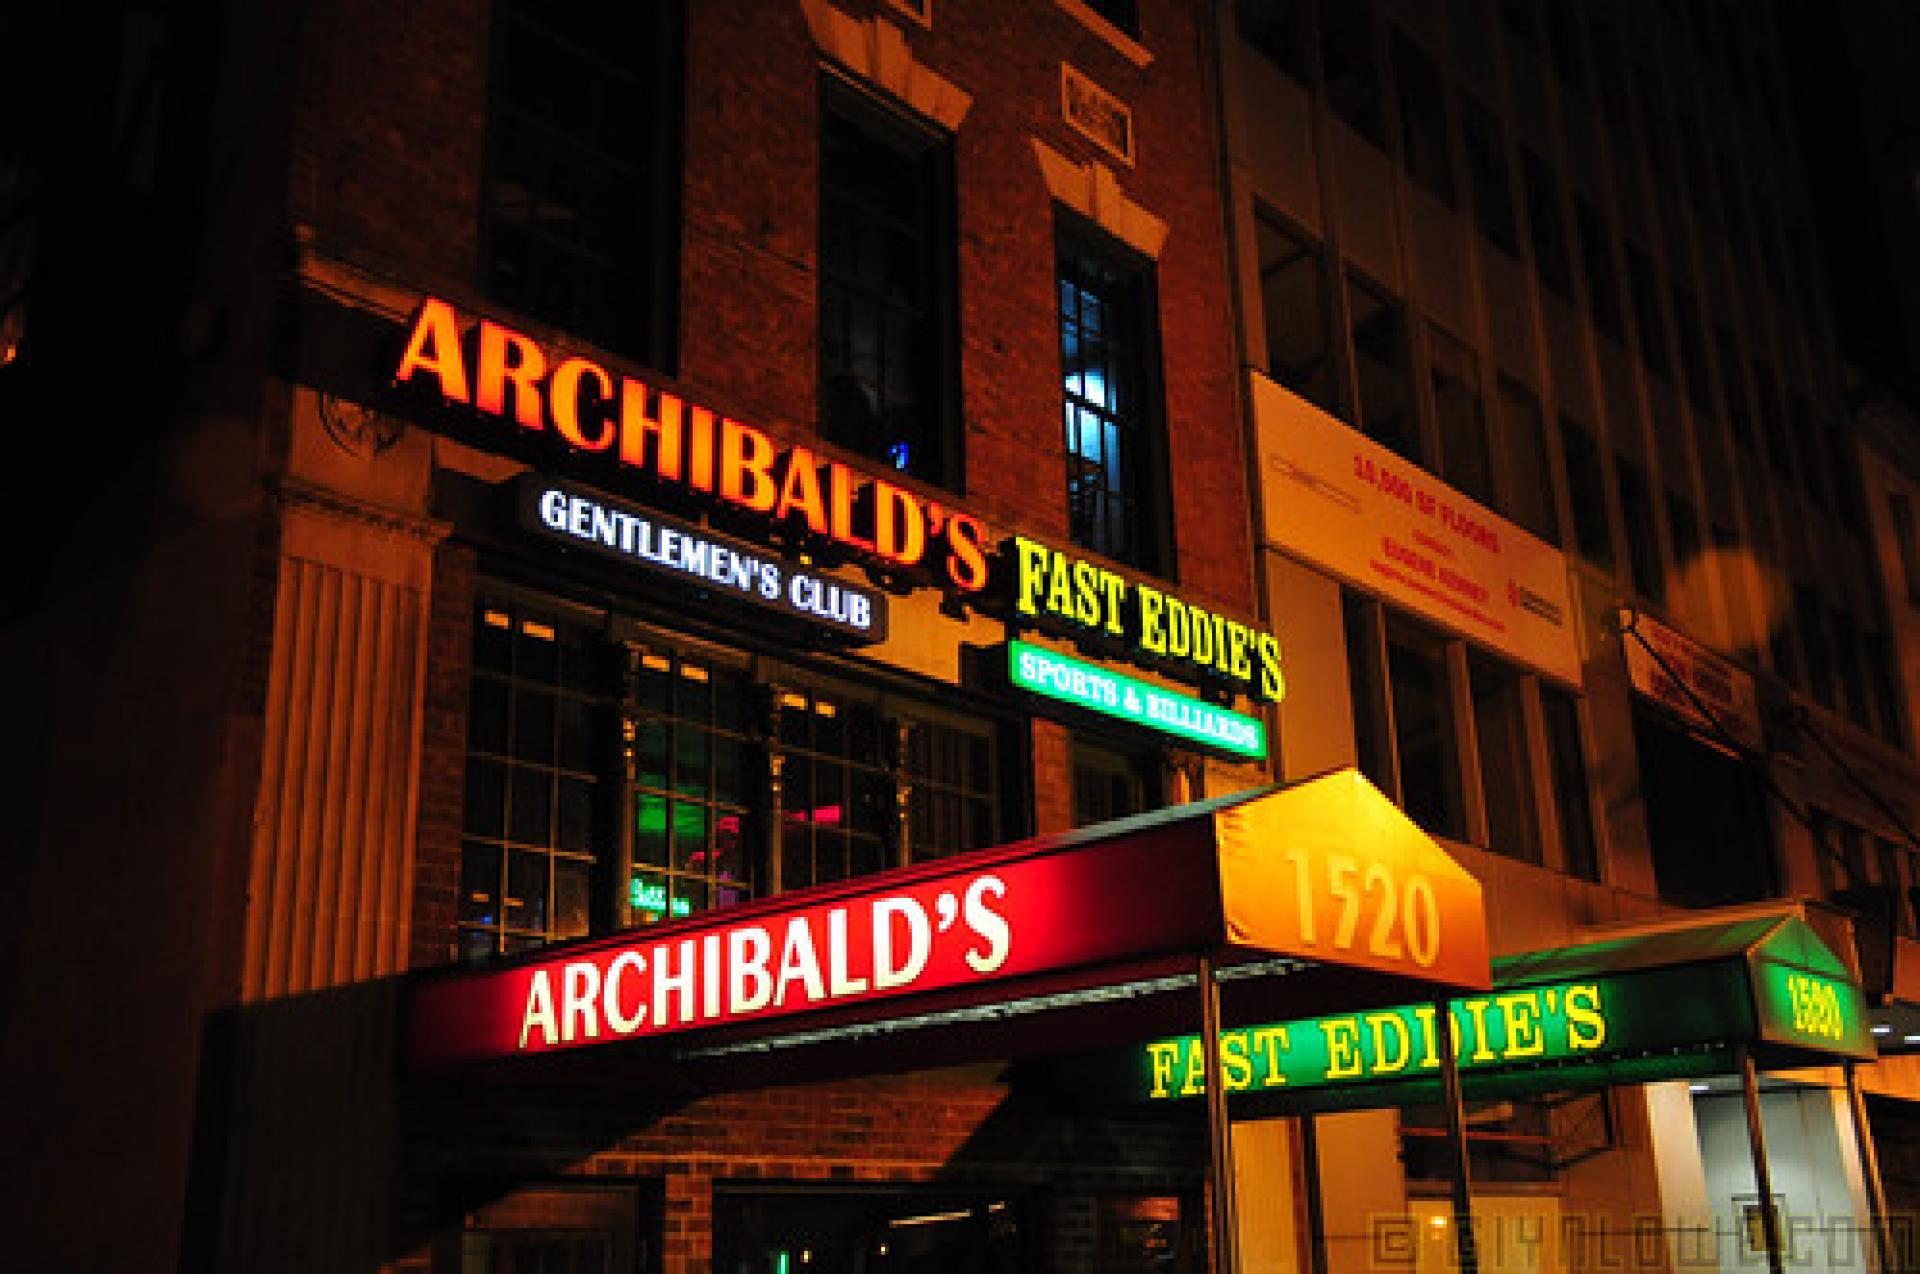 Archibald's Gentlemen's Club in Washington, DC